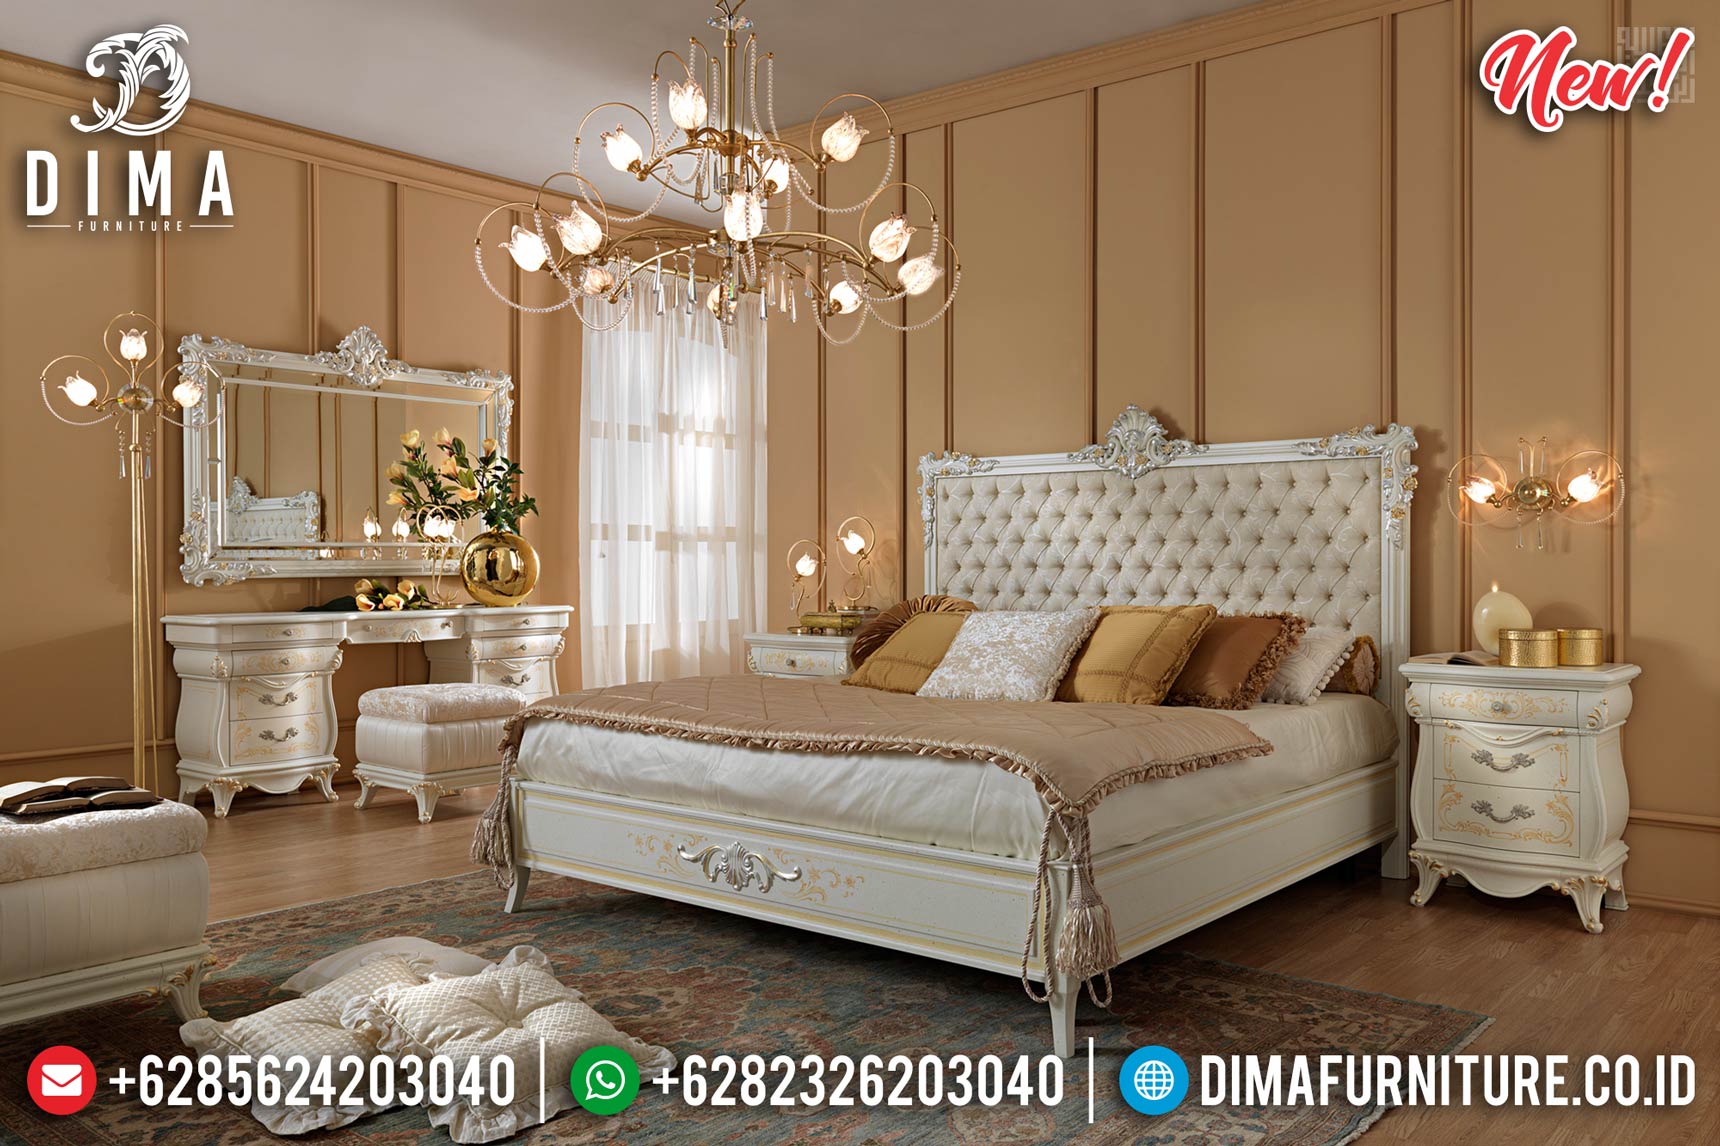 Best Seller Kamar Set Mewah Ukiran Luxury Classic Furniture Jepara Terbaru BT-0931